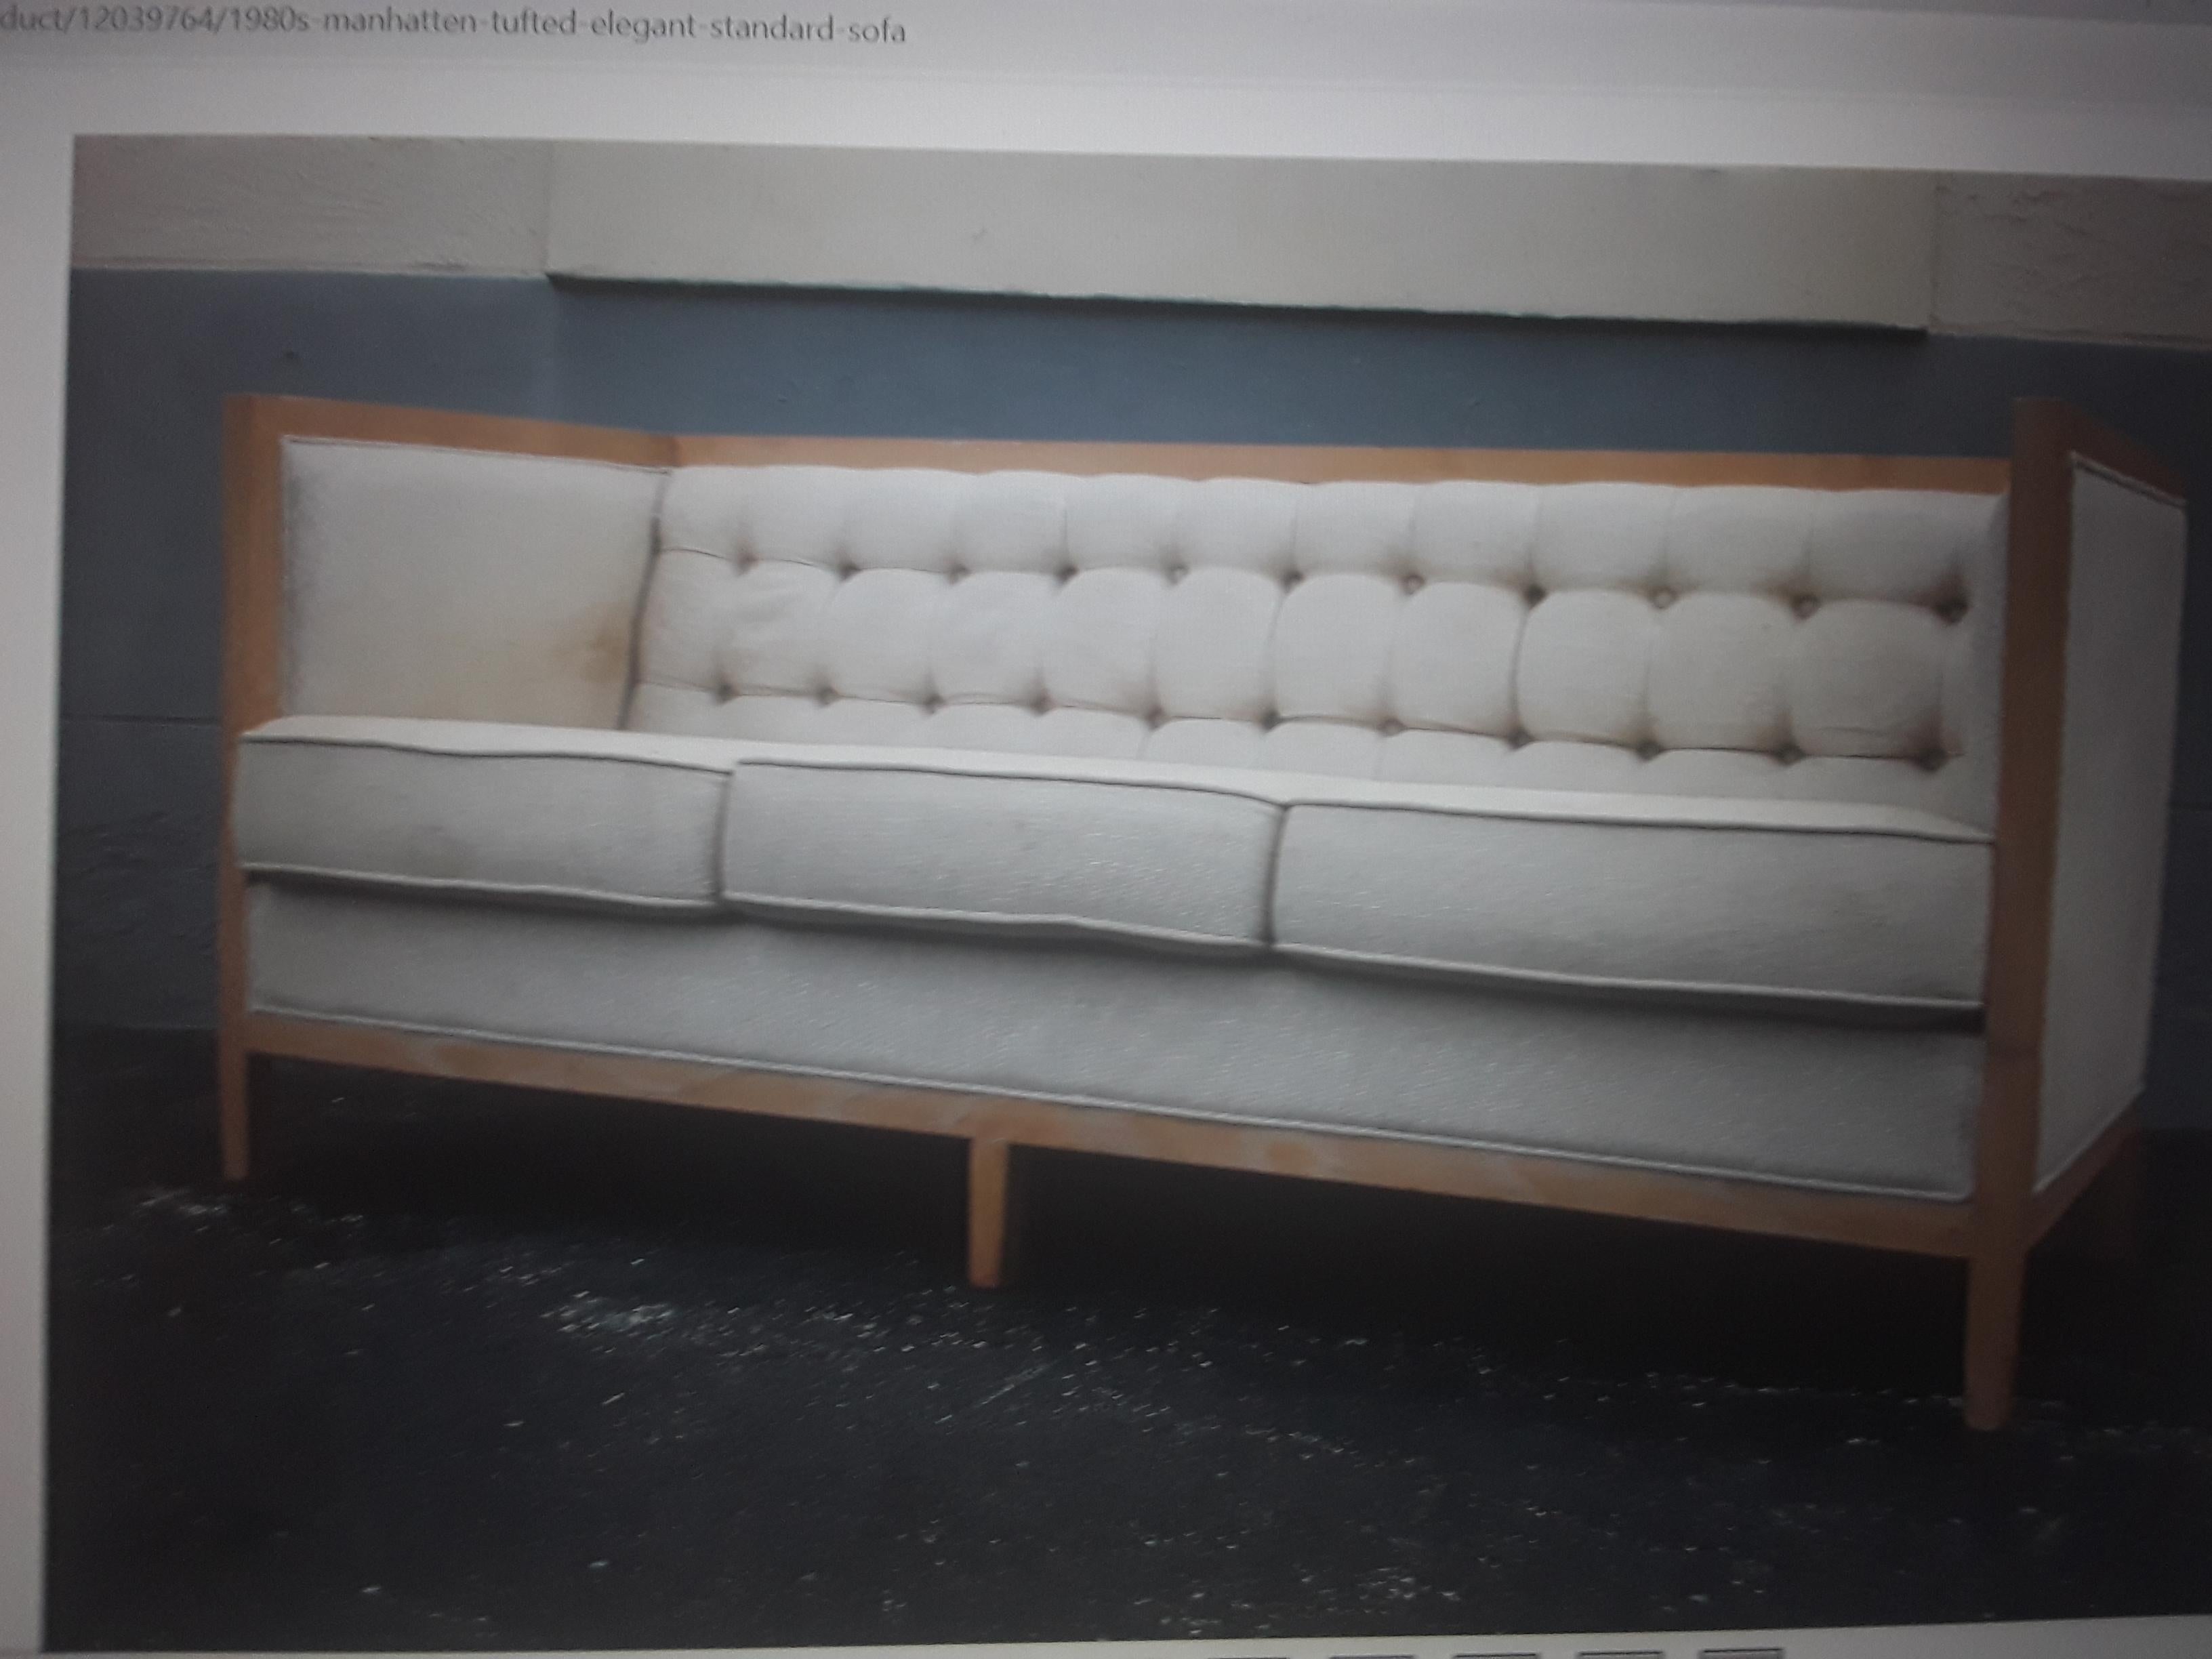 1980's Modern Manhattan Elegant Tufted Standard Sofa For Sale 1